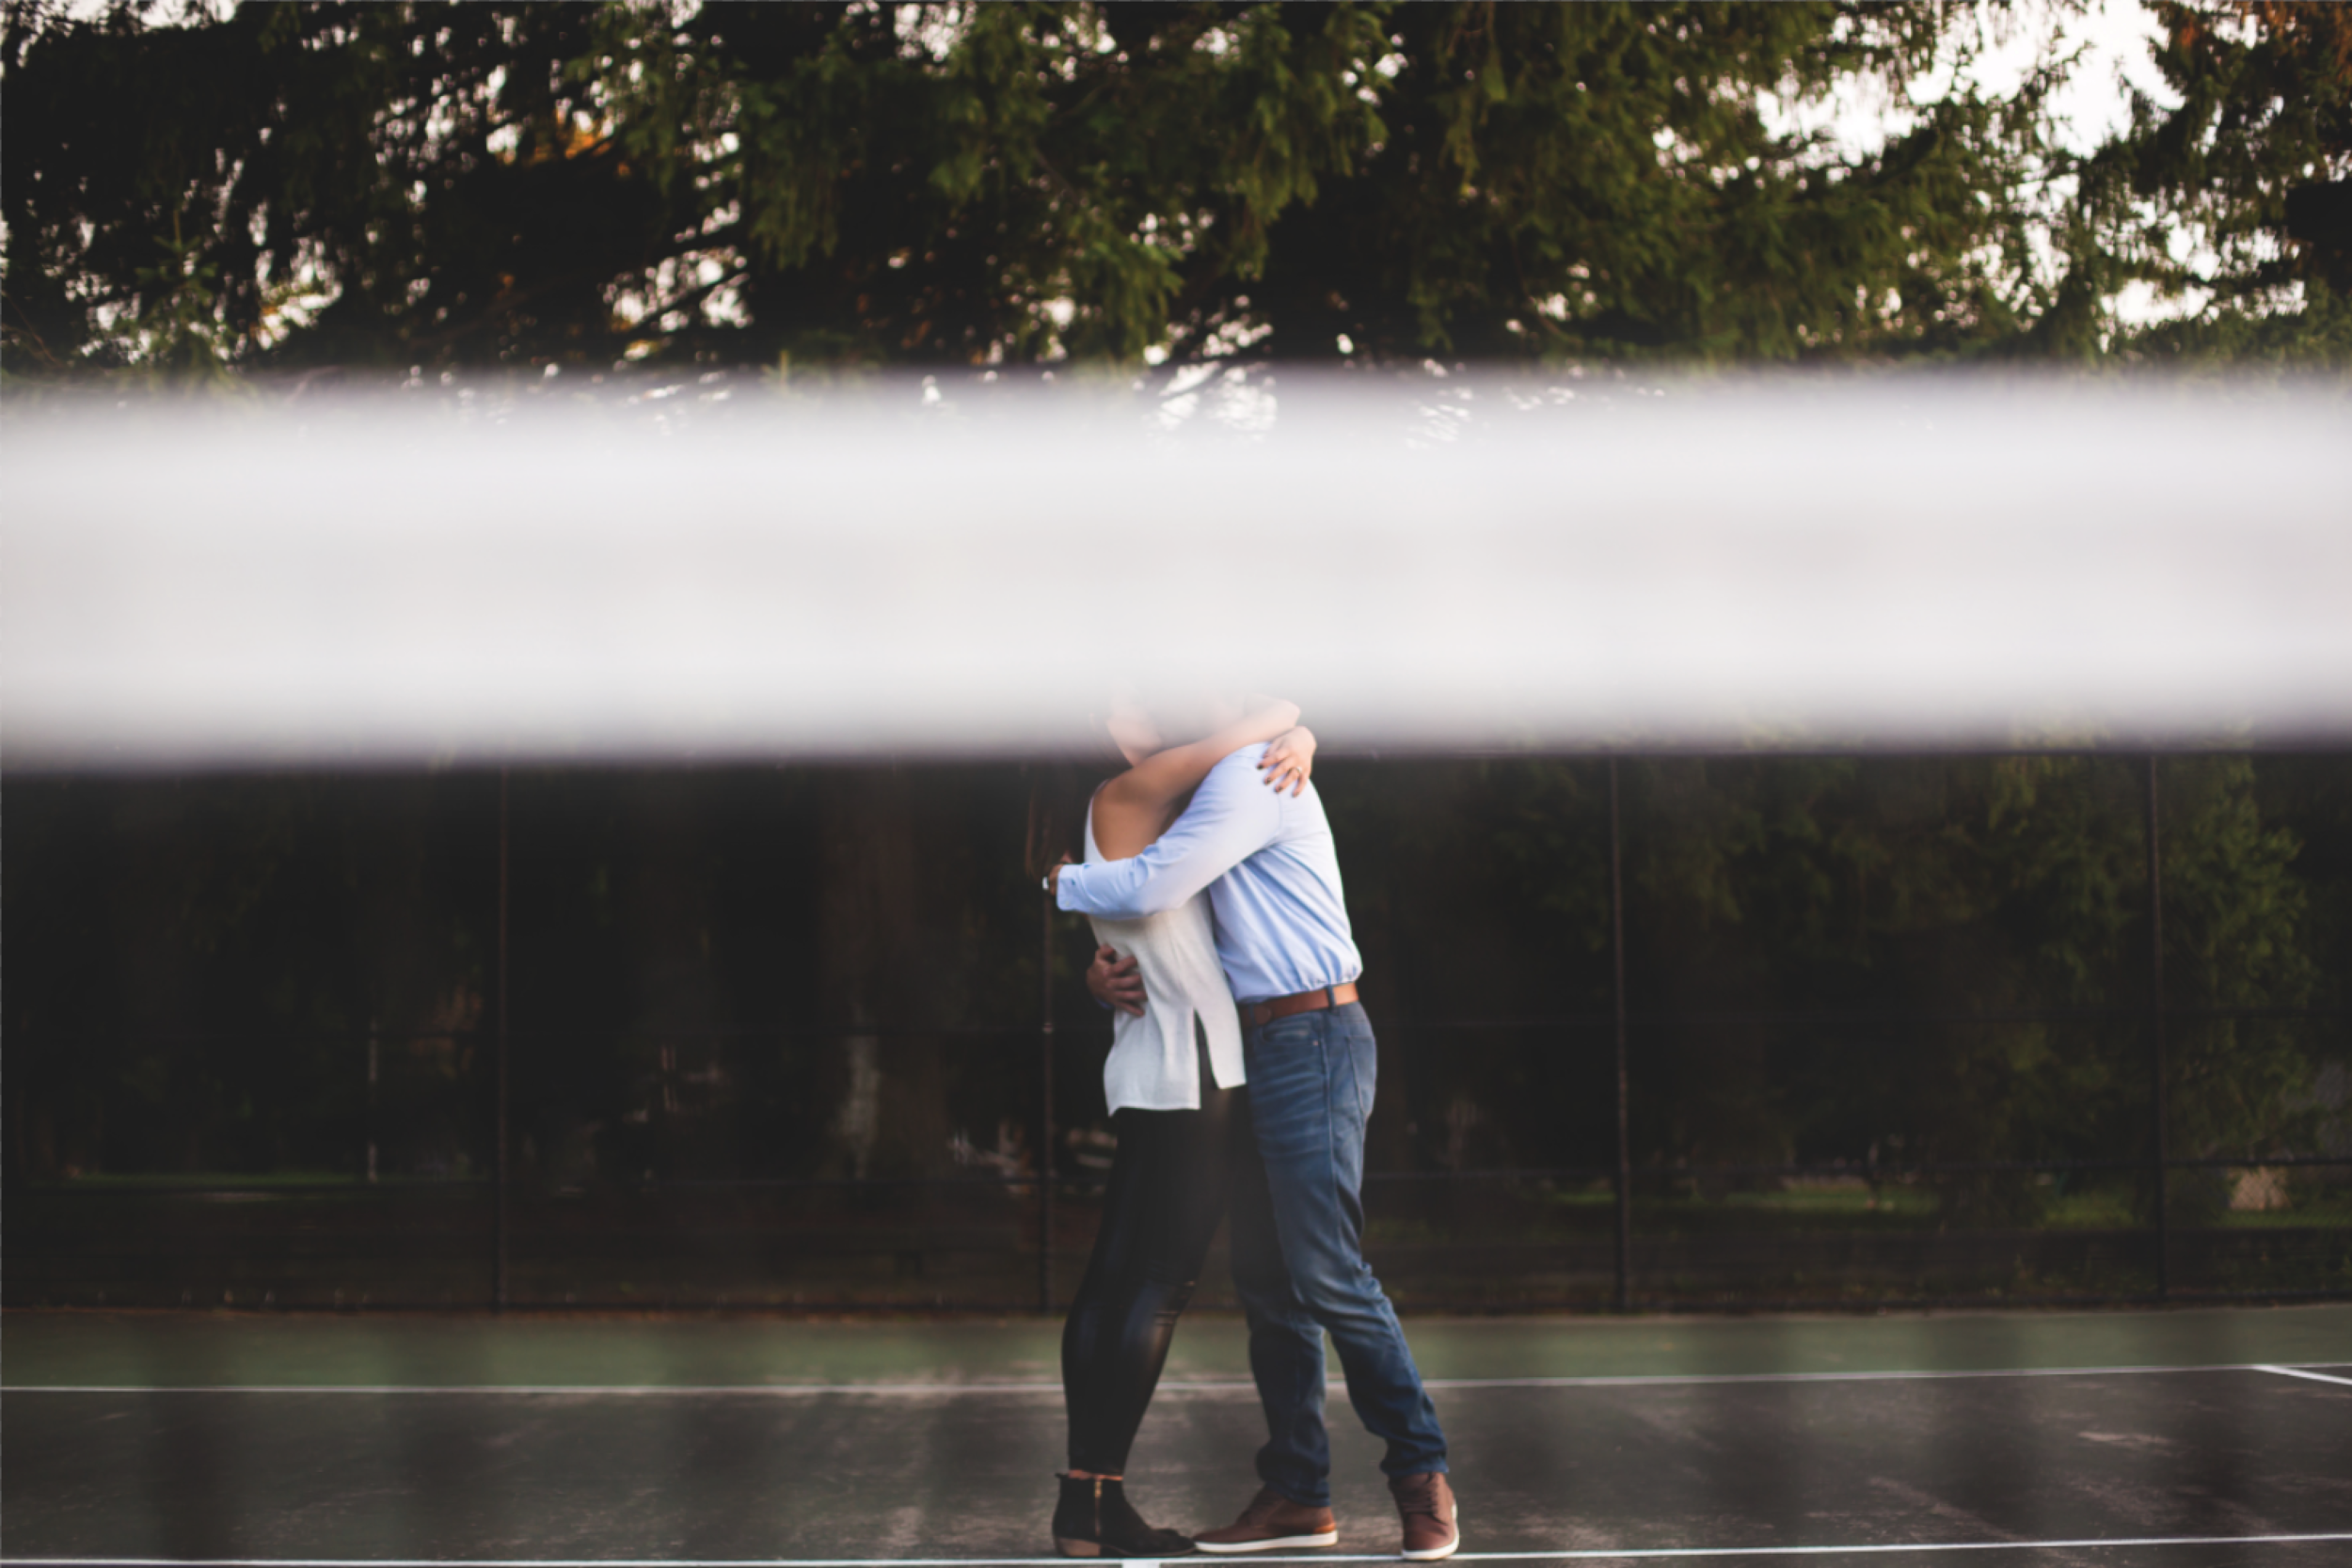 Engagement-Photos-Guelph-Park-Photographer-Wedding-Hamilton-GTA-Niagara-Oakville-Guelph-Tennis-Court-Basketball-Modern-Moments-by-Lauren-Engaged-Photography-Photo-Image-9.png